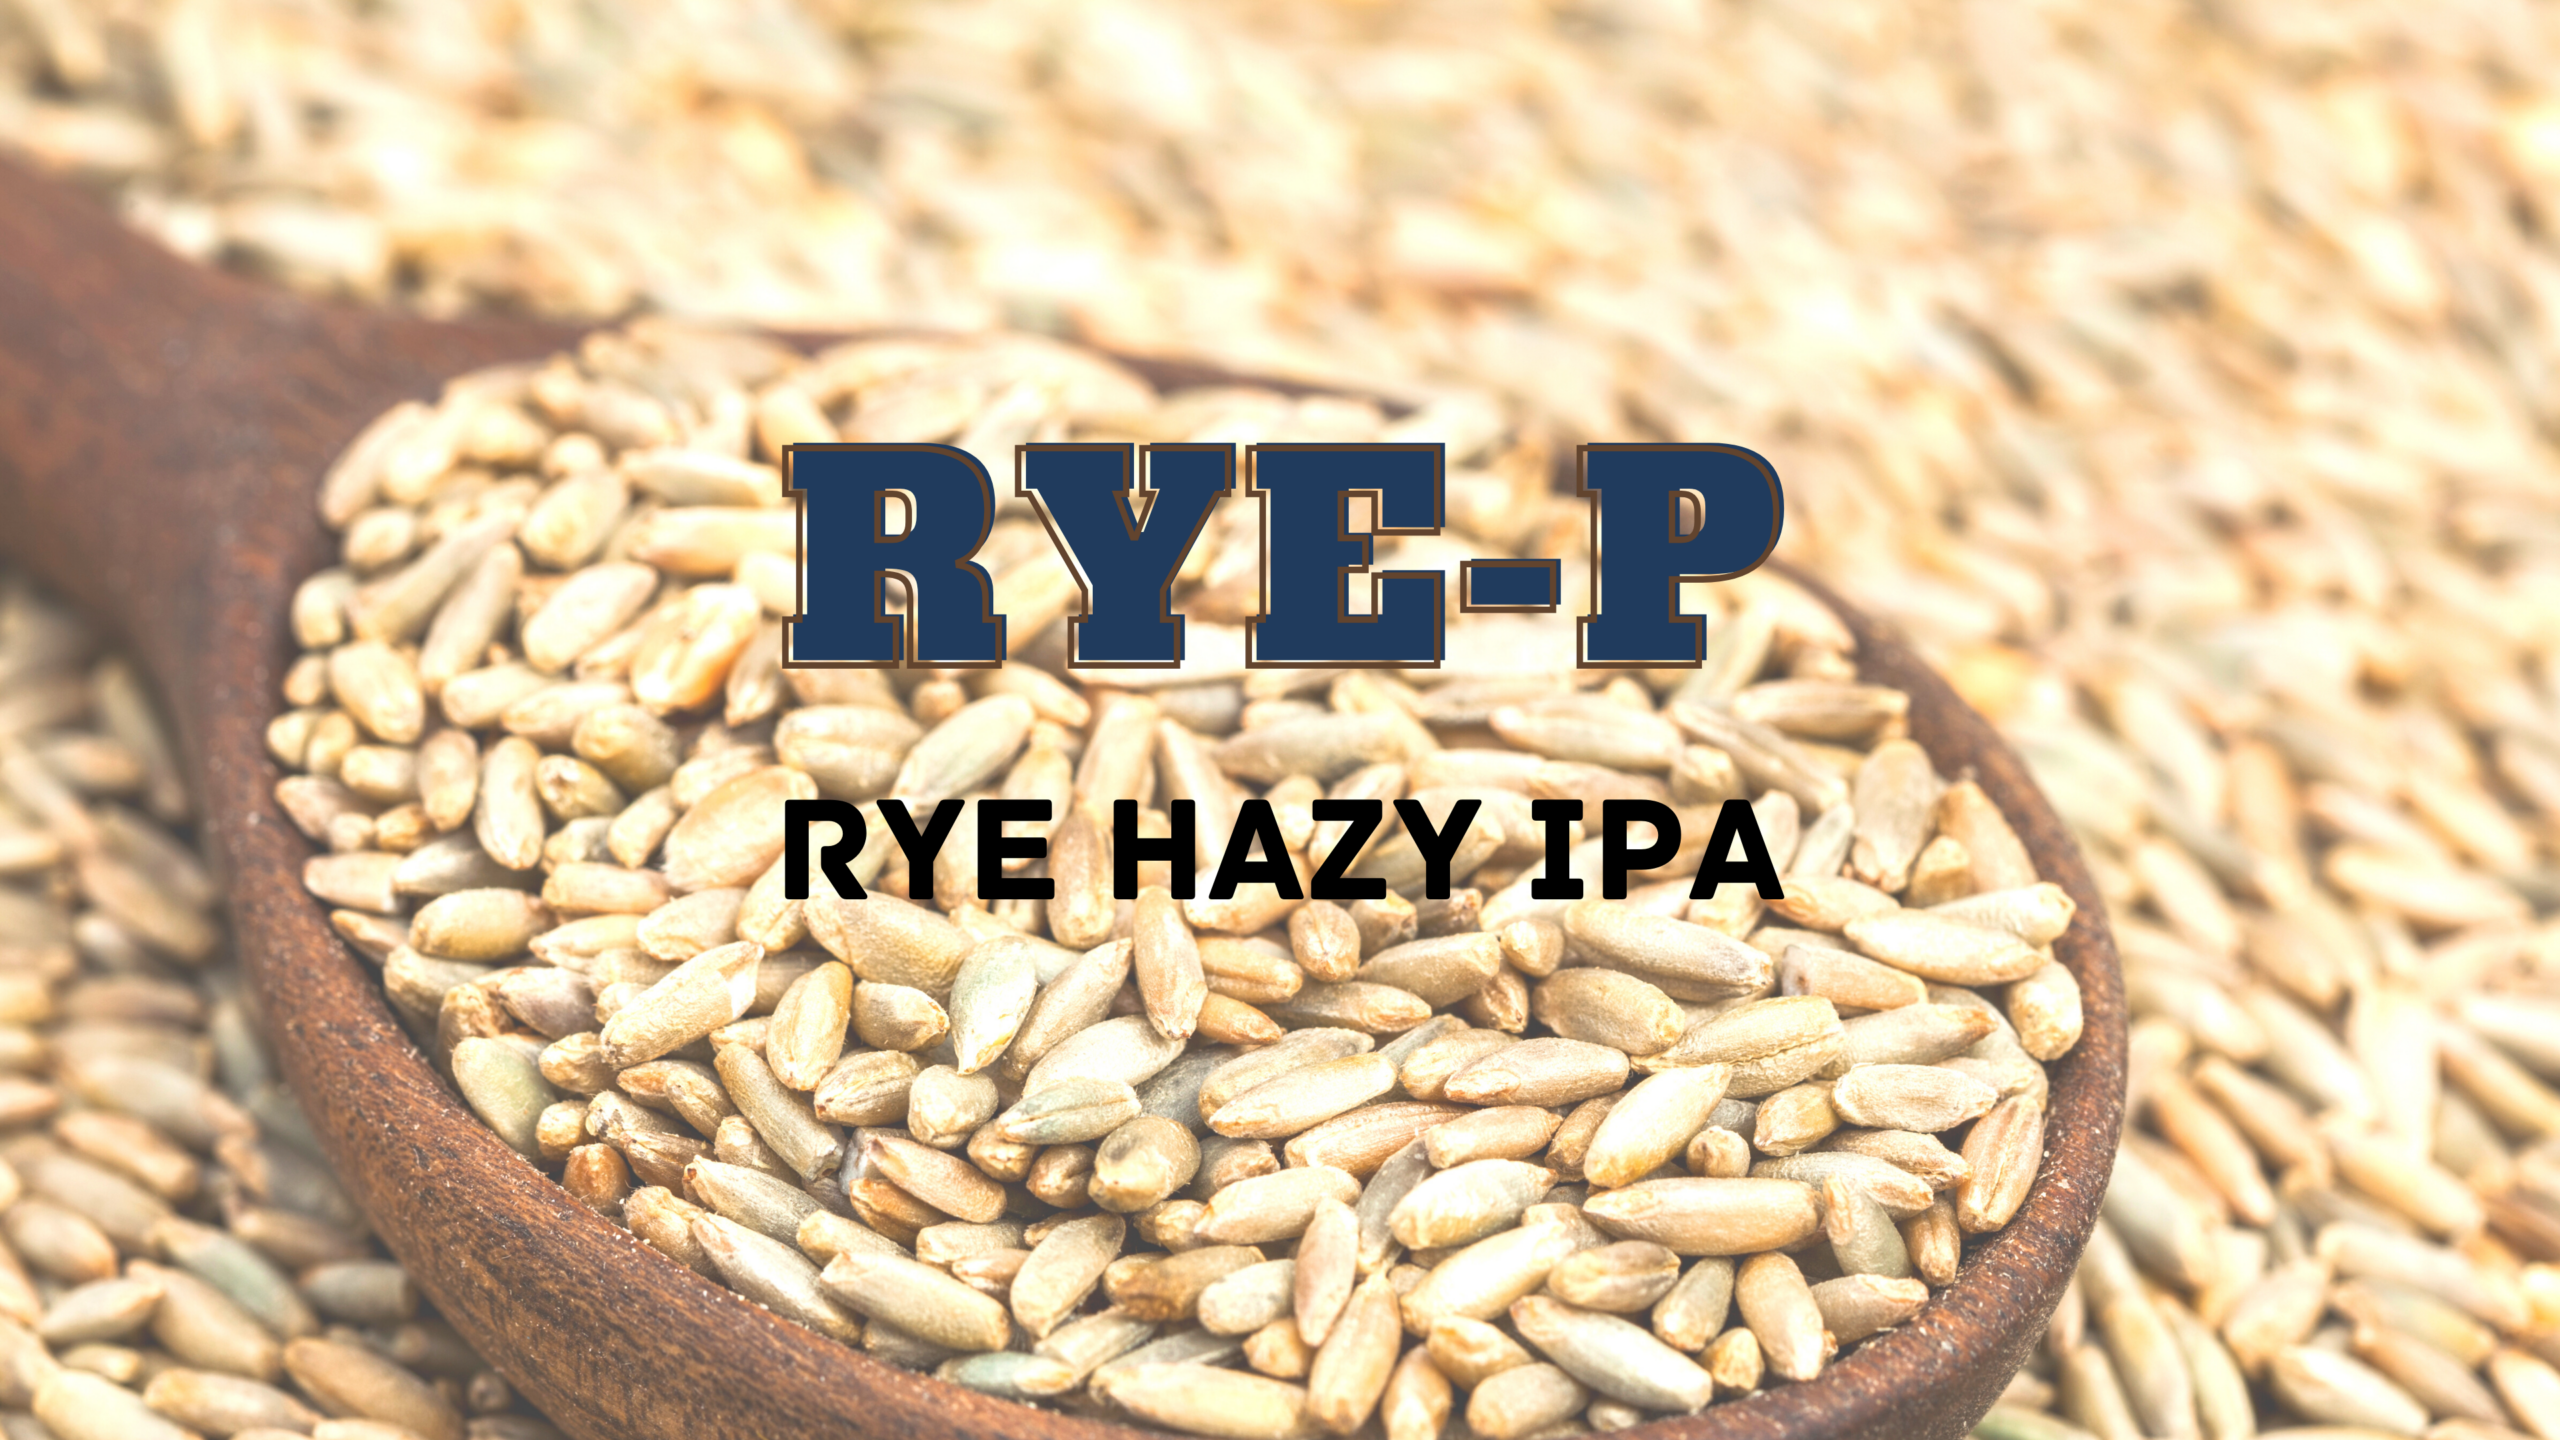 Rye-p Rye Hazy IPA Release at On Rotation